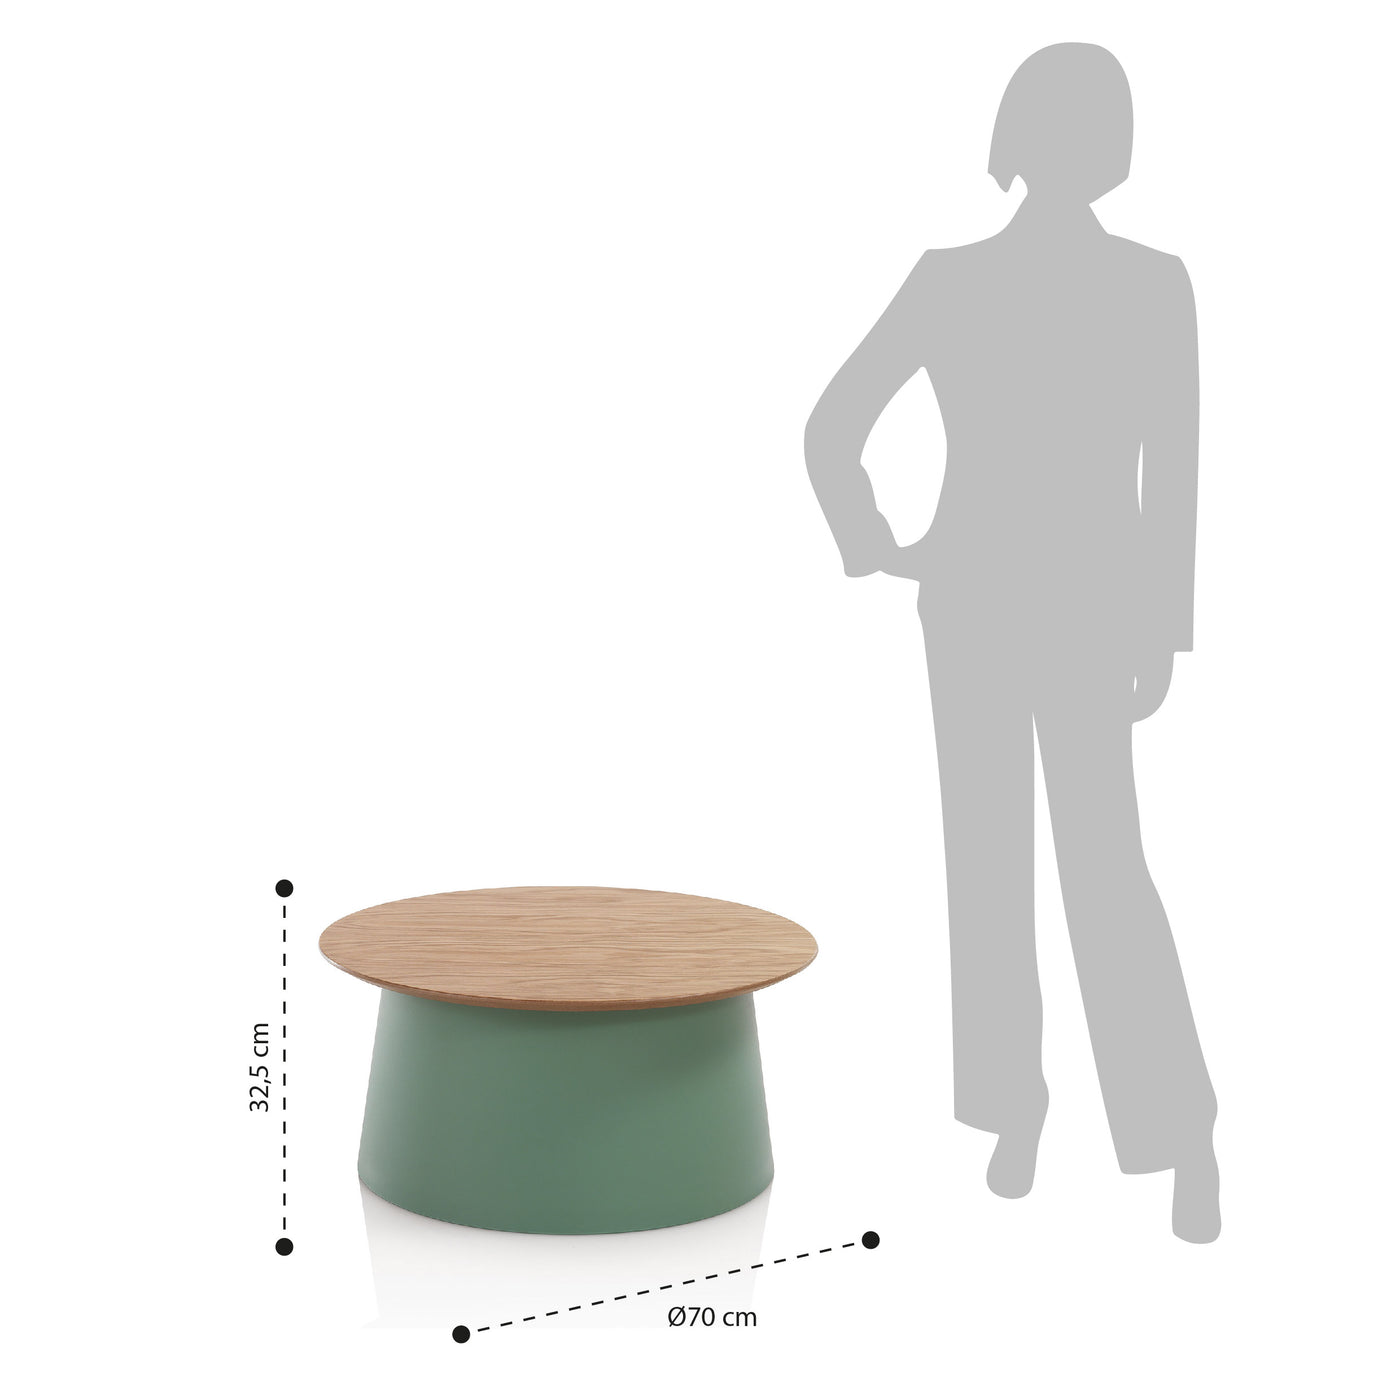 SKUNK-B green coffee table